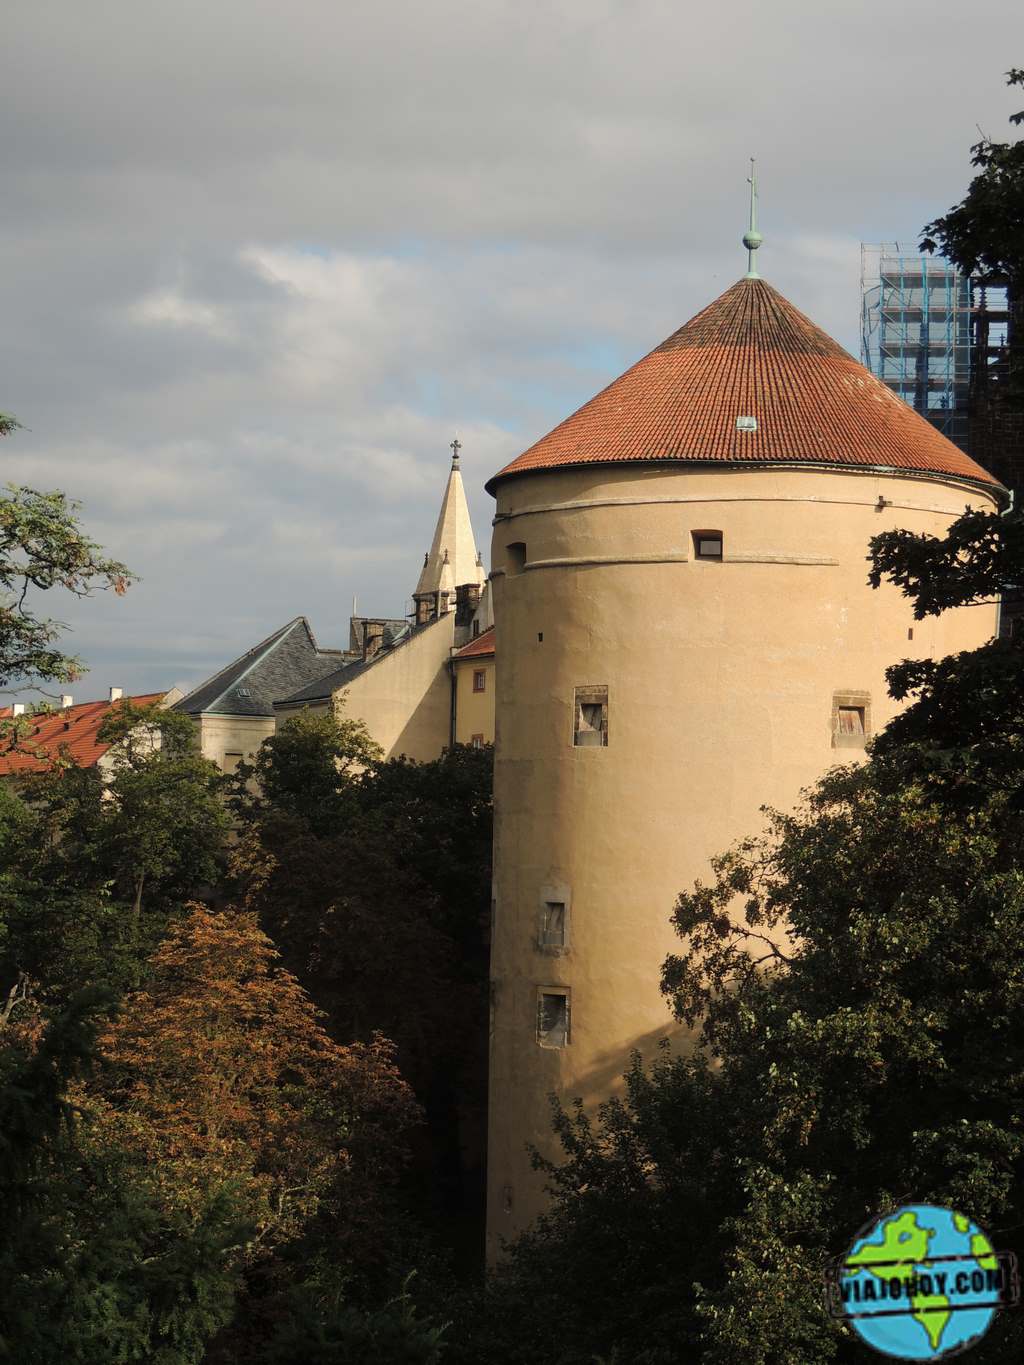 Torre-daliborka(viajohoy)26